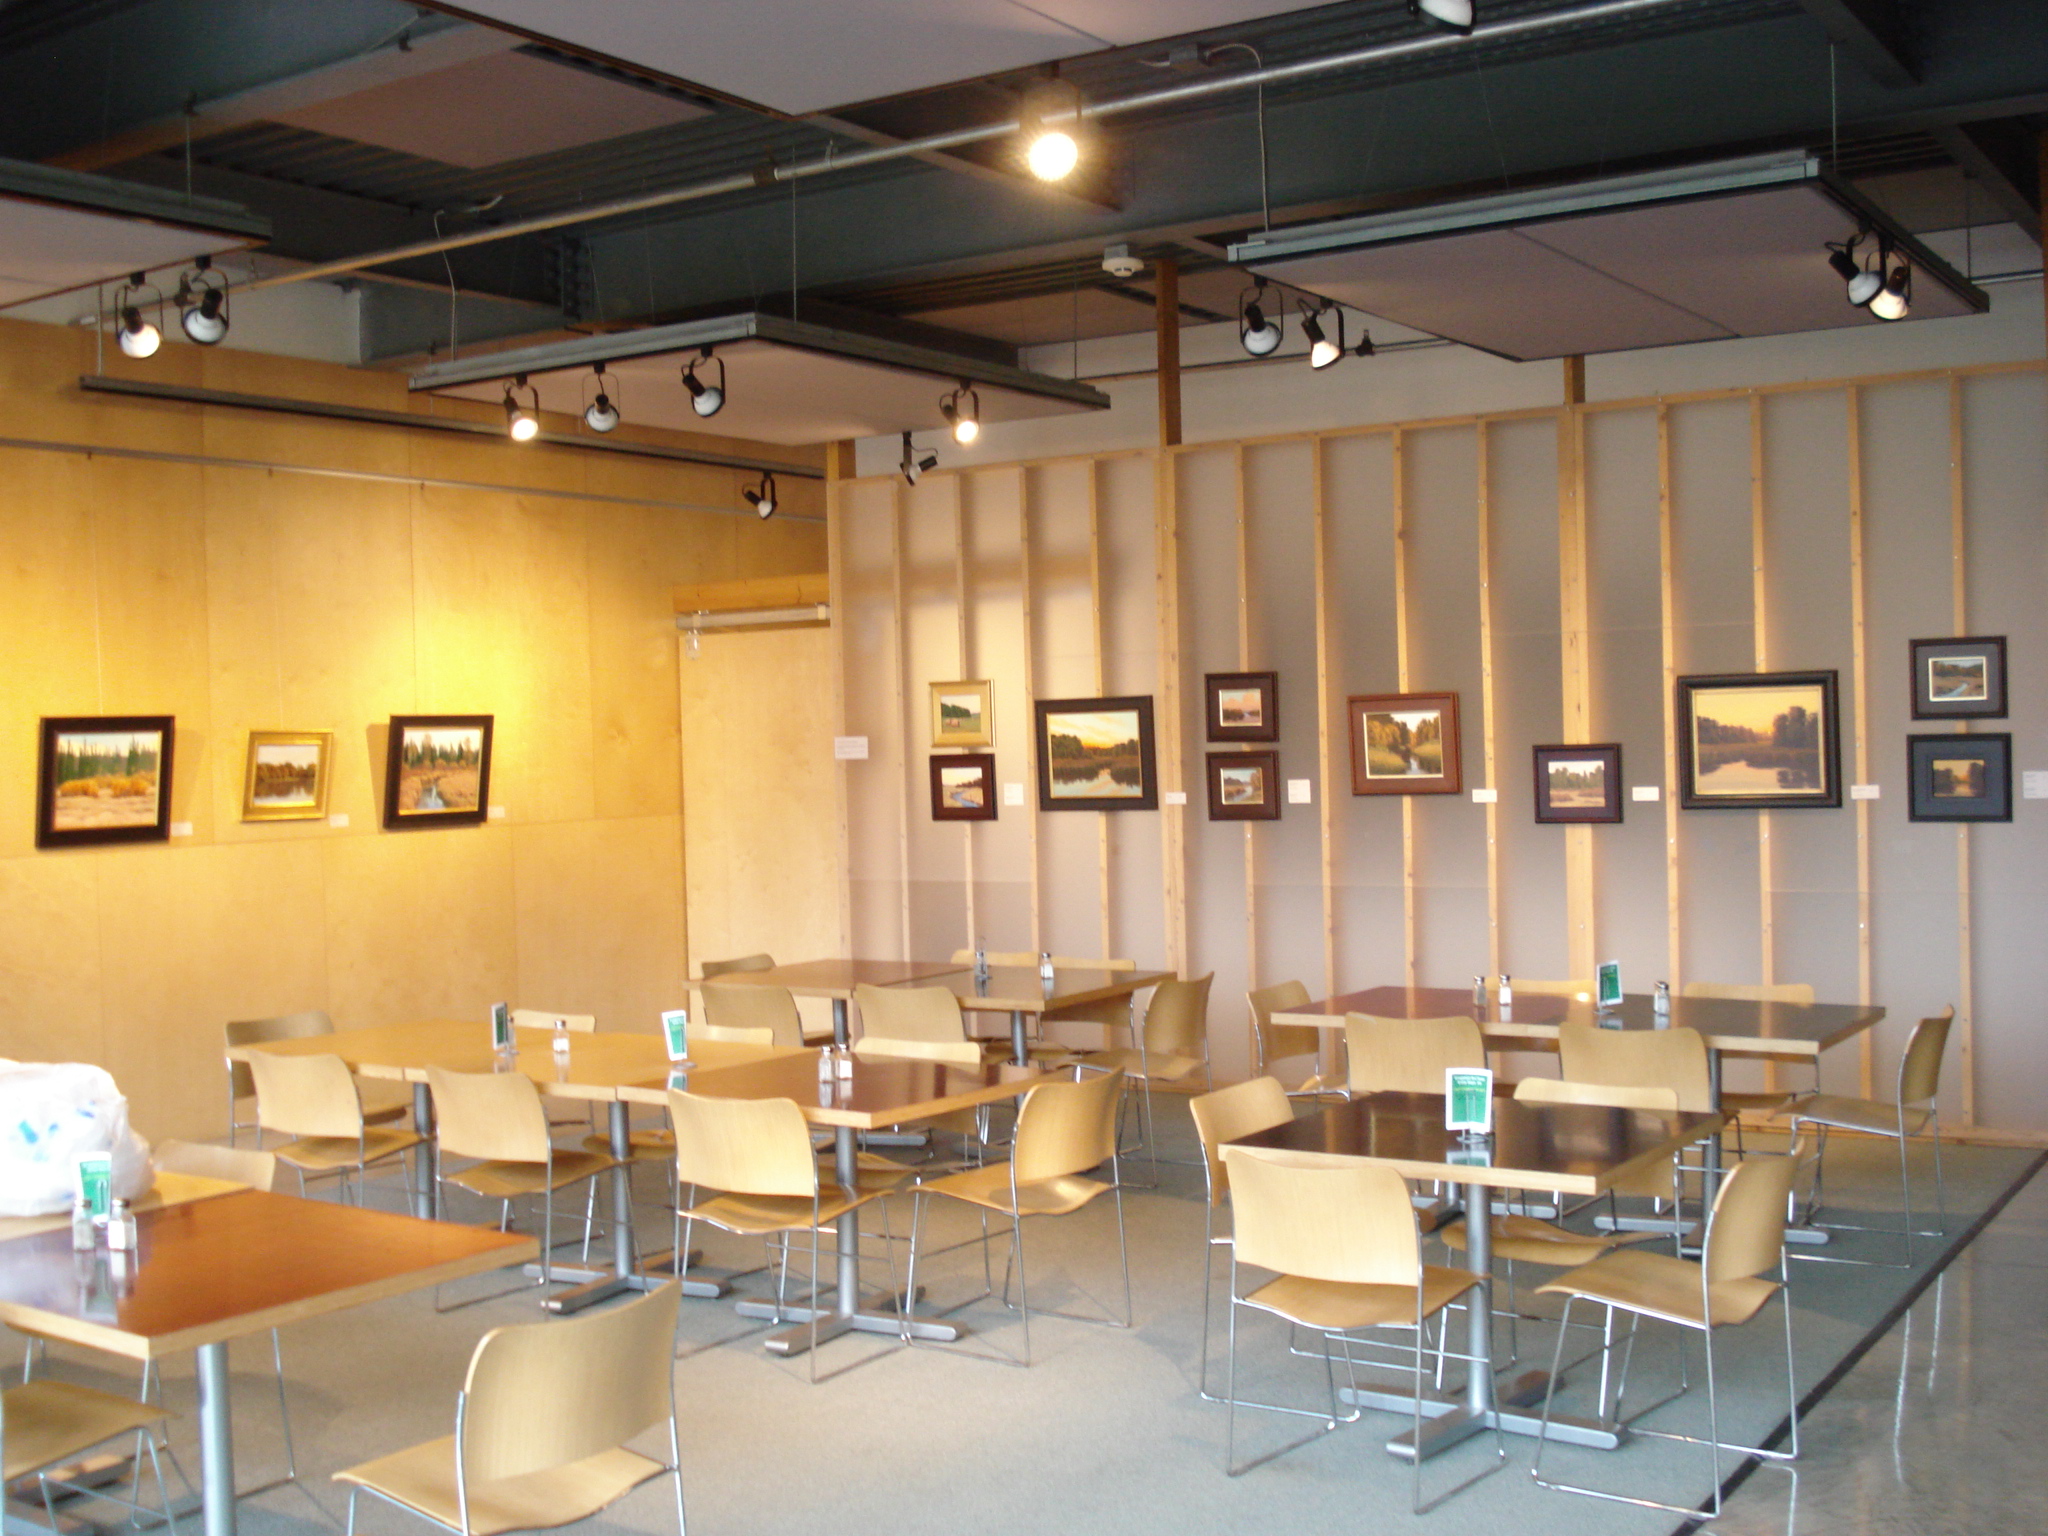 The Art Center Cafe